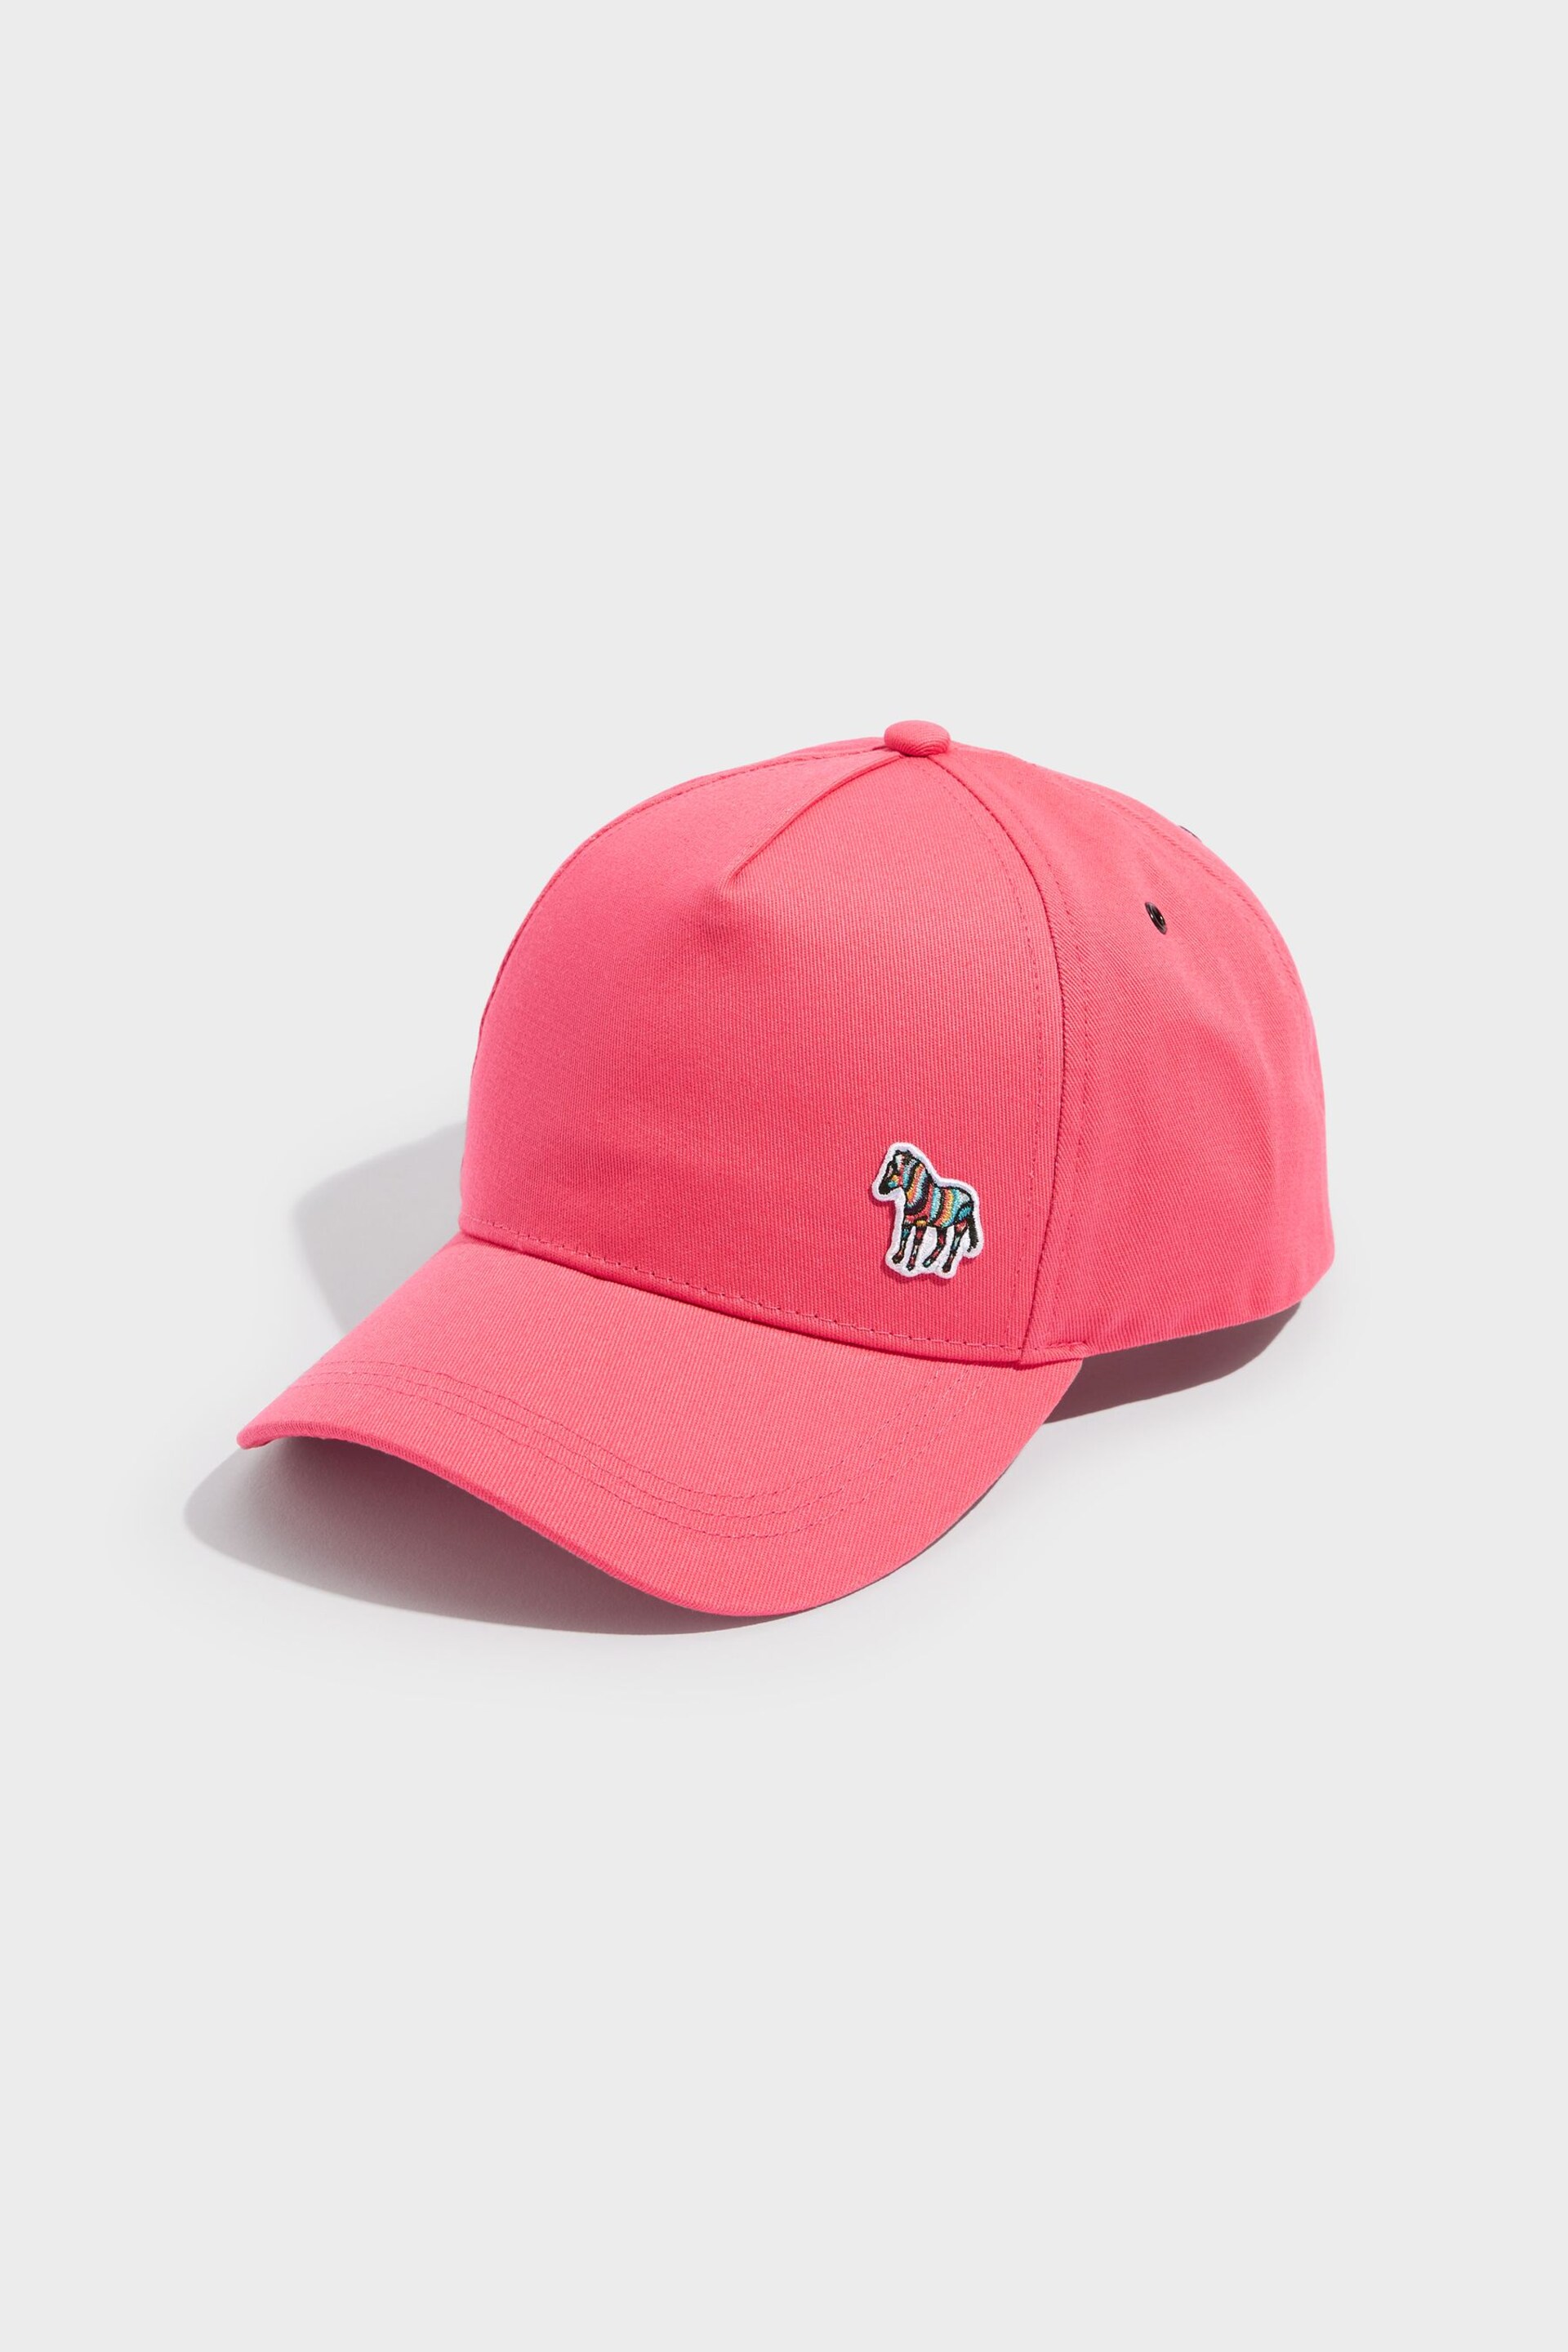 Paul Smith Junior Girls Pink Zebra Logo Baseball Cap - Image 1 of 5